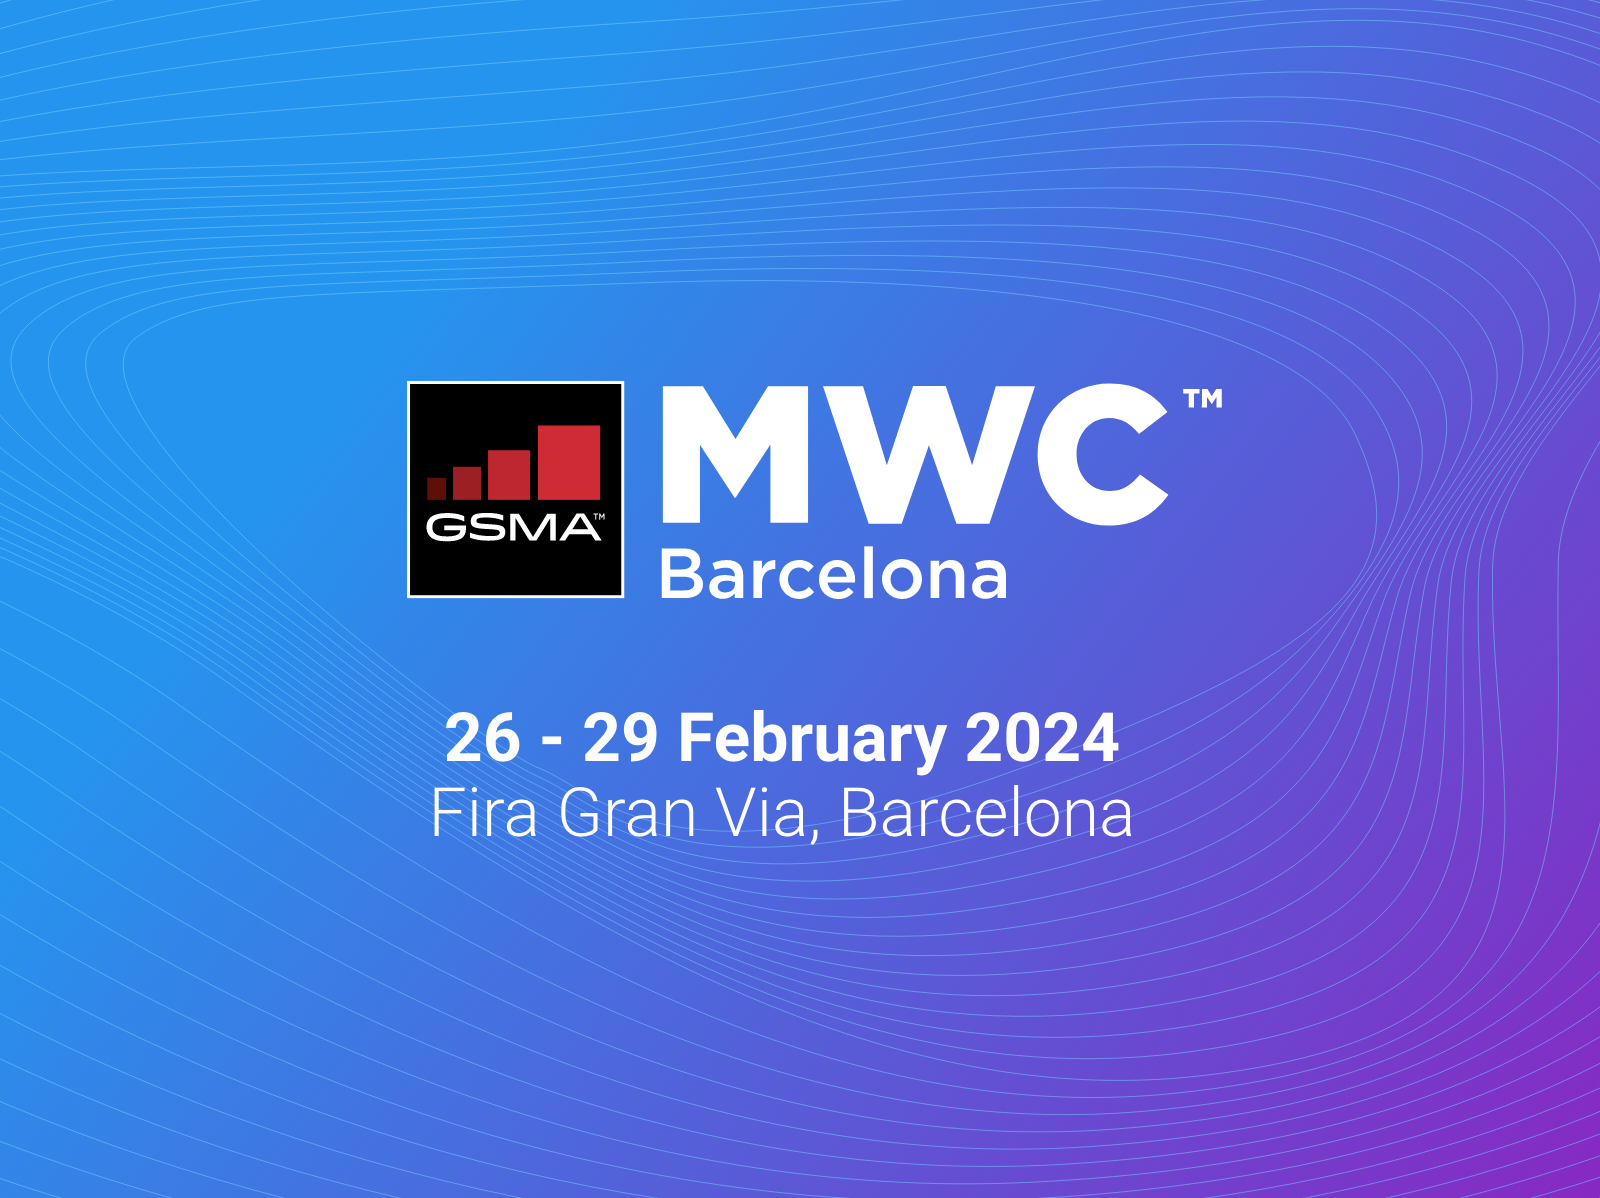 Spectrum Effect MWC Barcelona 2024